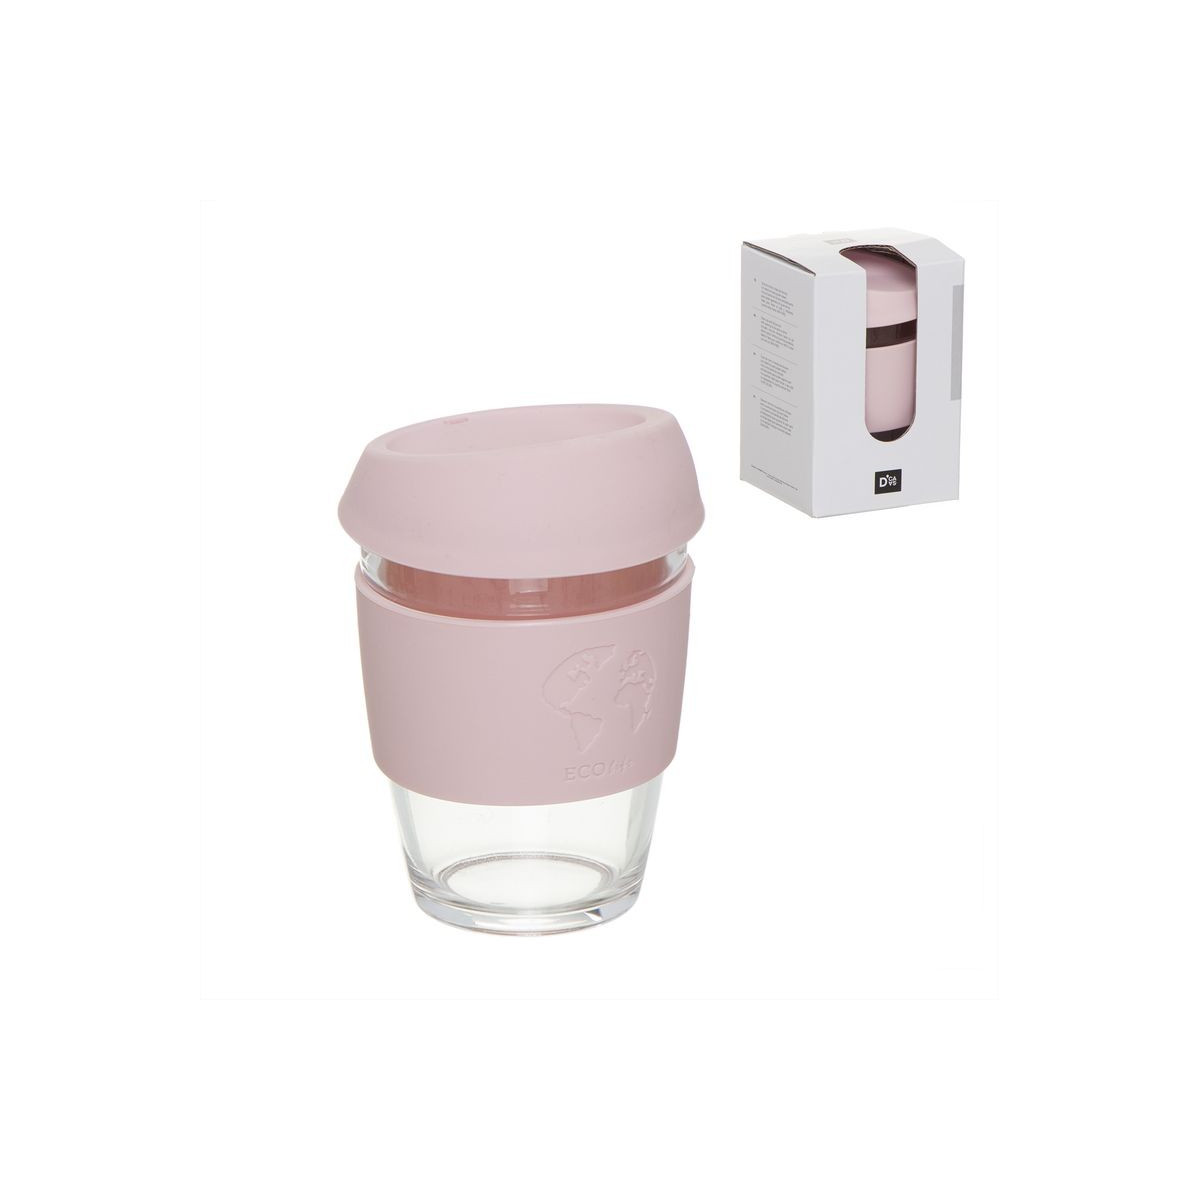 Vaso para cafe reutiilizable 360ml rosa